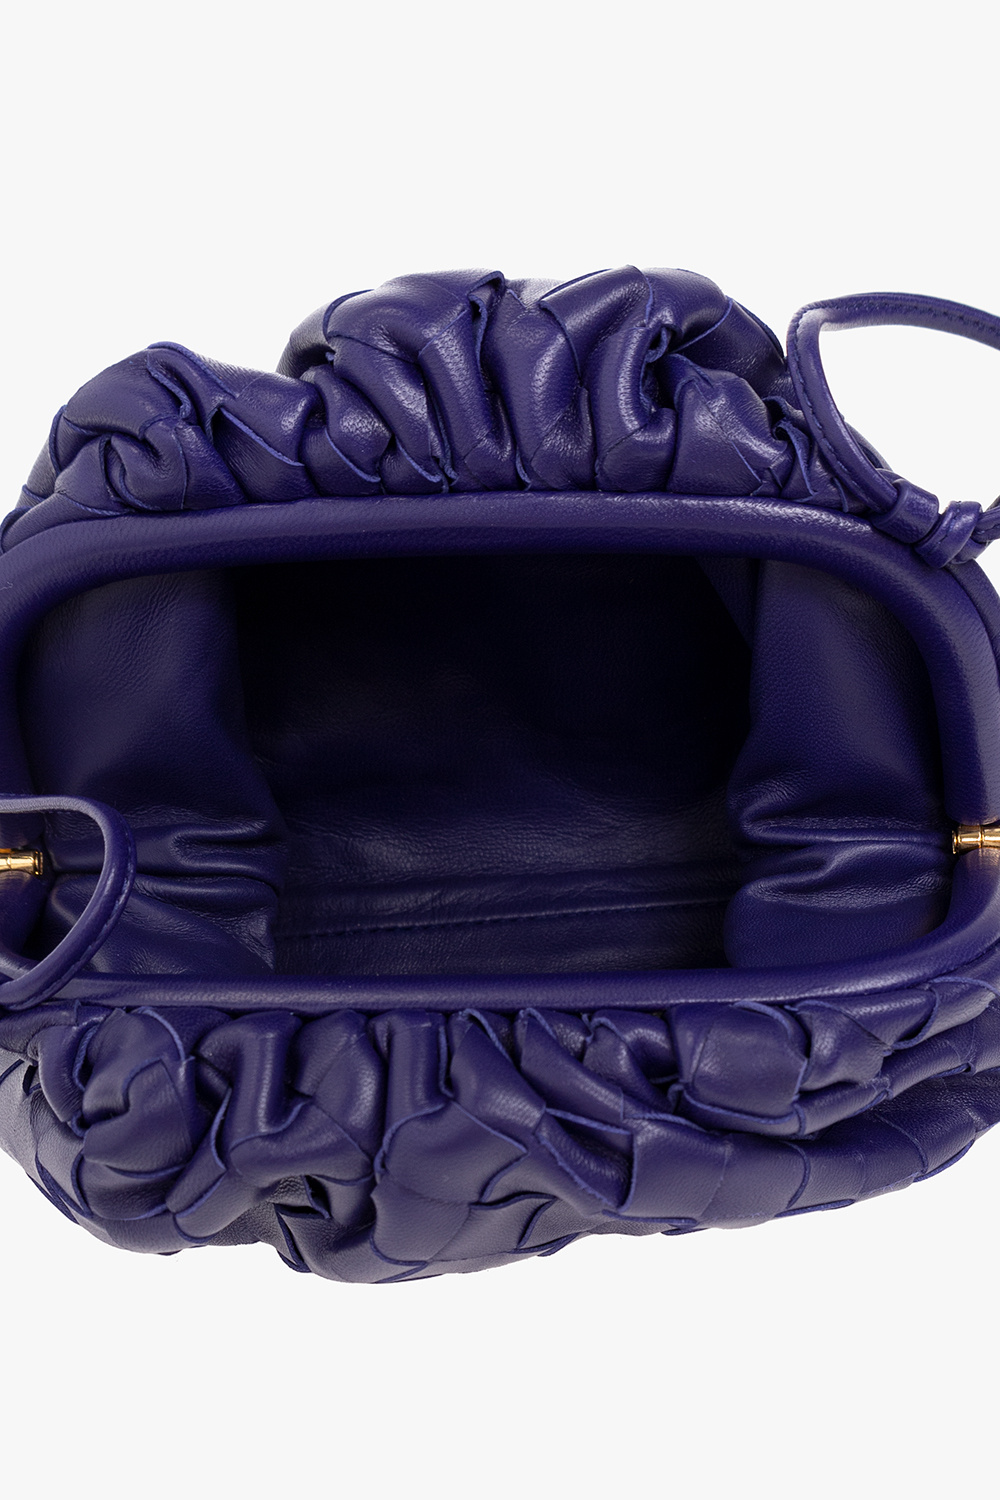 Pomoko Small Purse Shoulder Bag Mini Clutch Purses for Women Trendy Handbag Purse, Women's, Purple